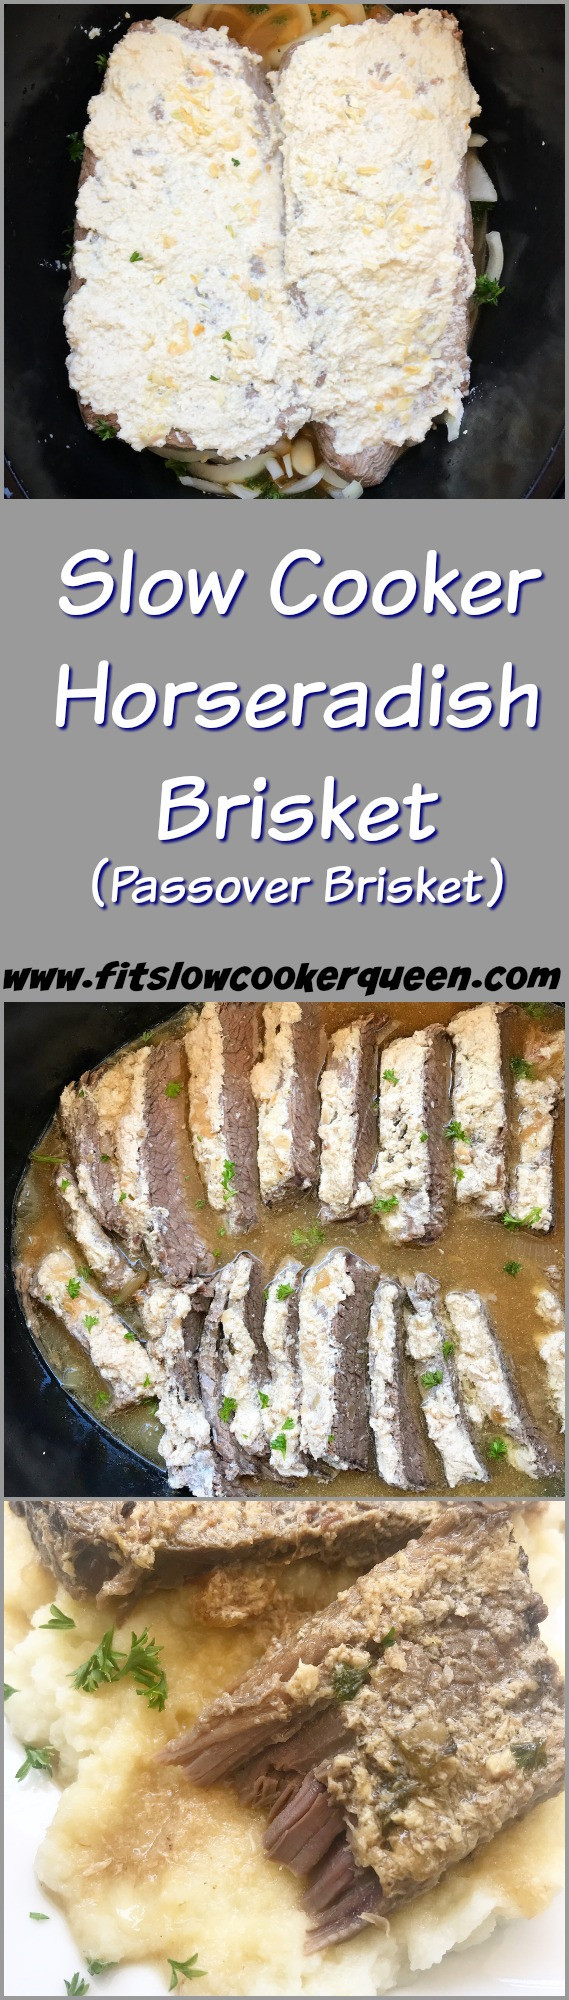 Passover Brisket Recipe Slow Cooker
 Slow Cooker Horseradish Brisket Passover Brisket Fit